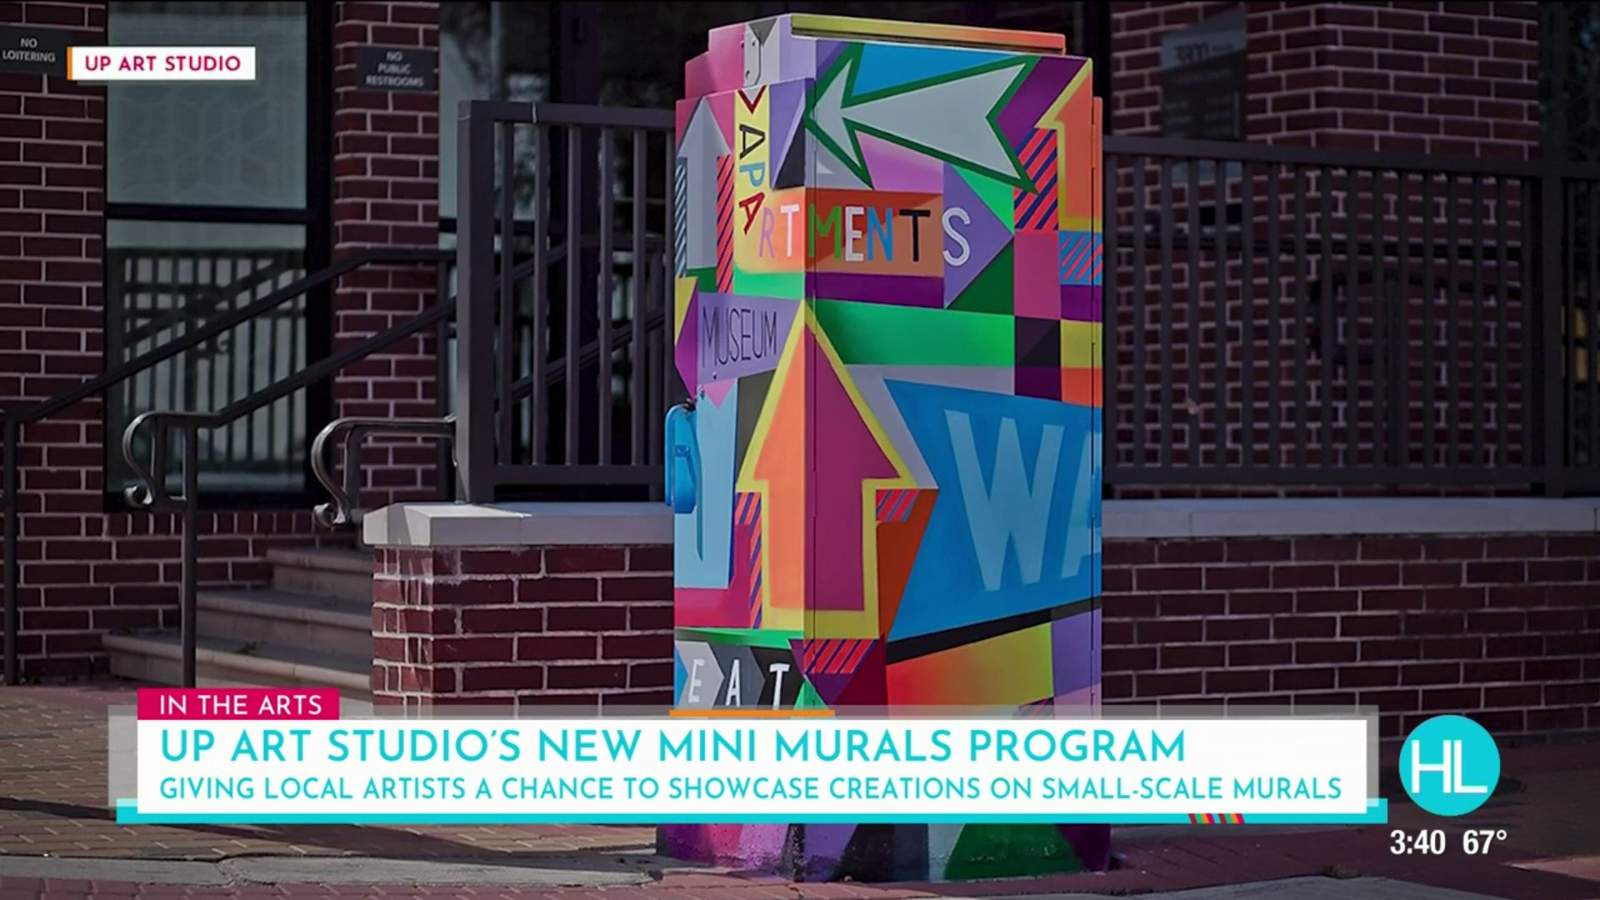 Up Art Studio Houston’s new program looking for local artists to paint “mini murals”